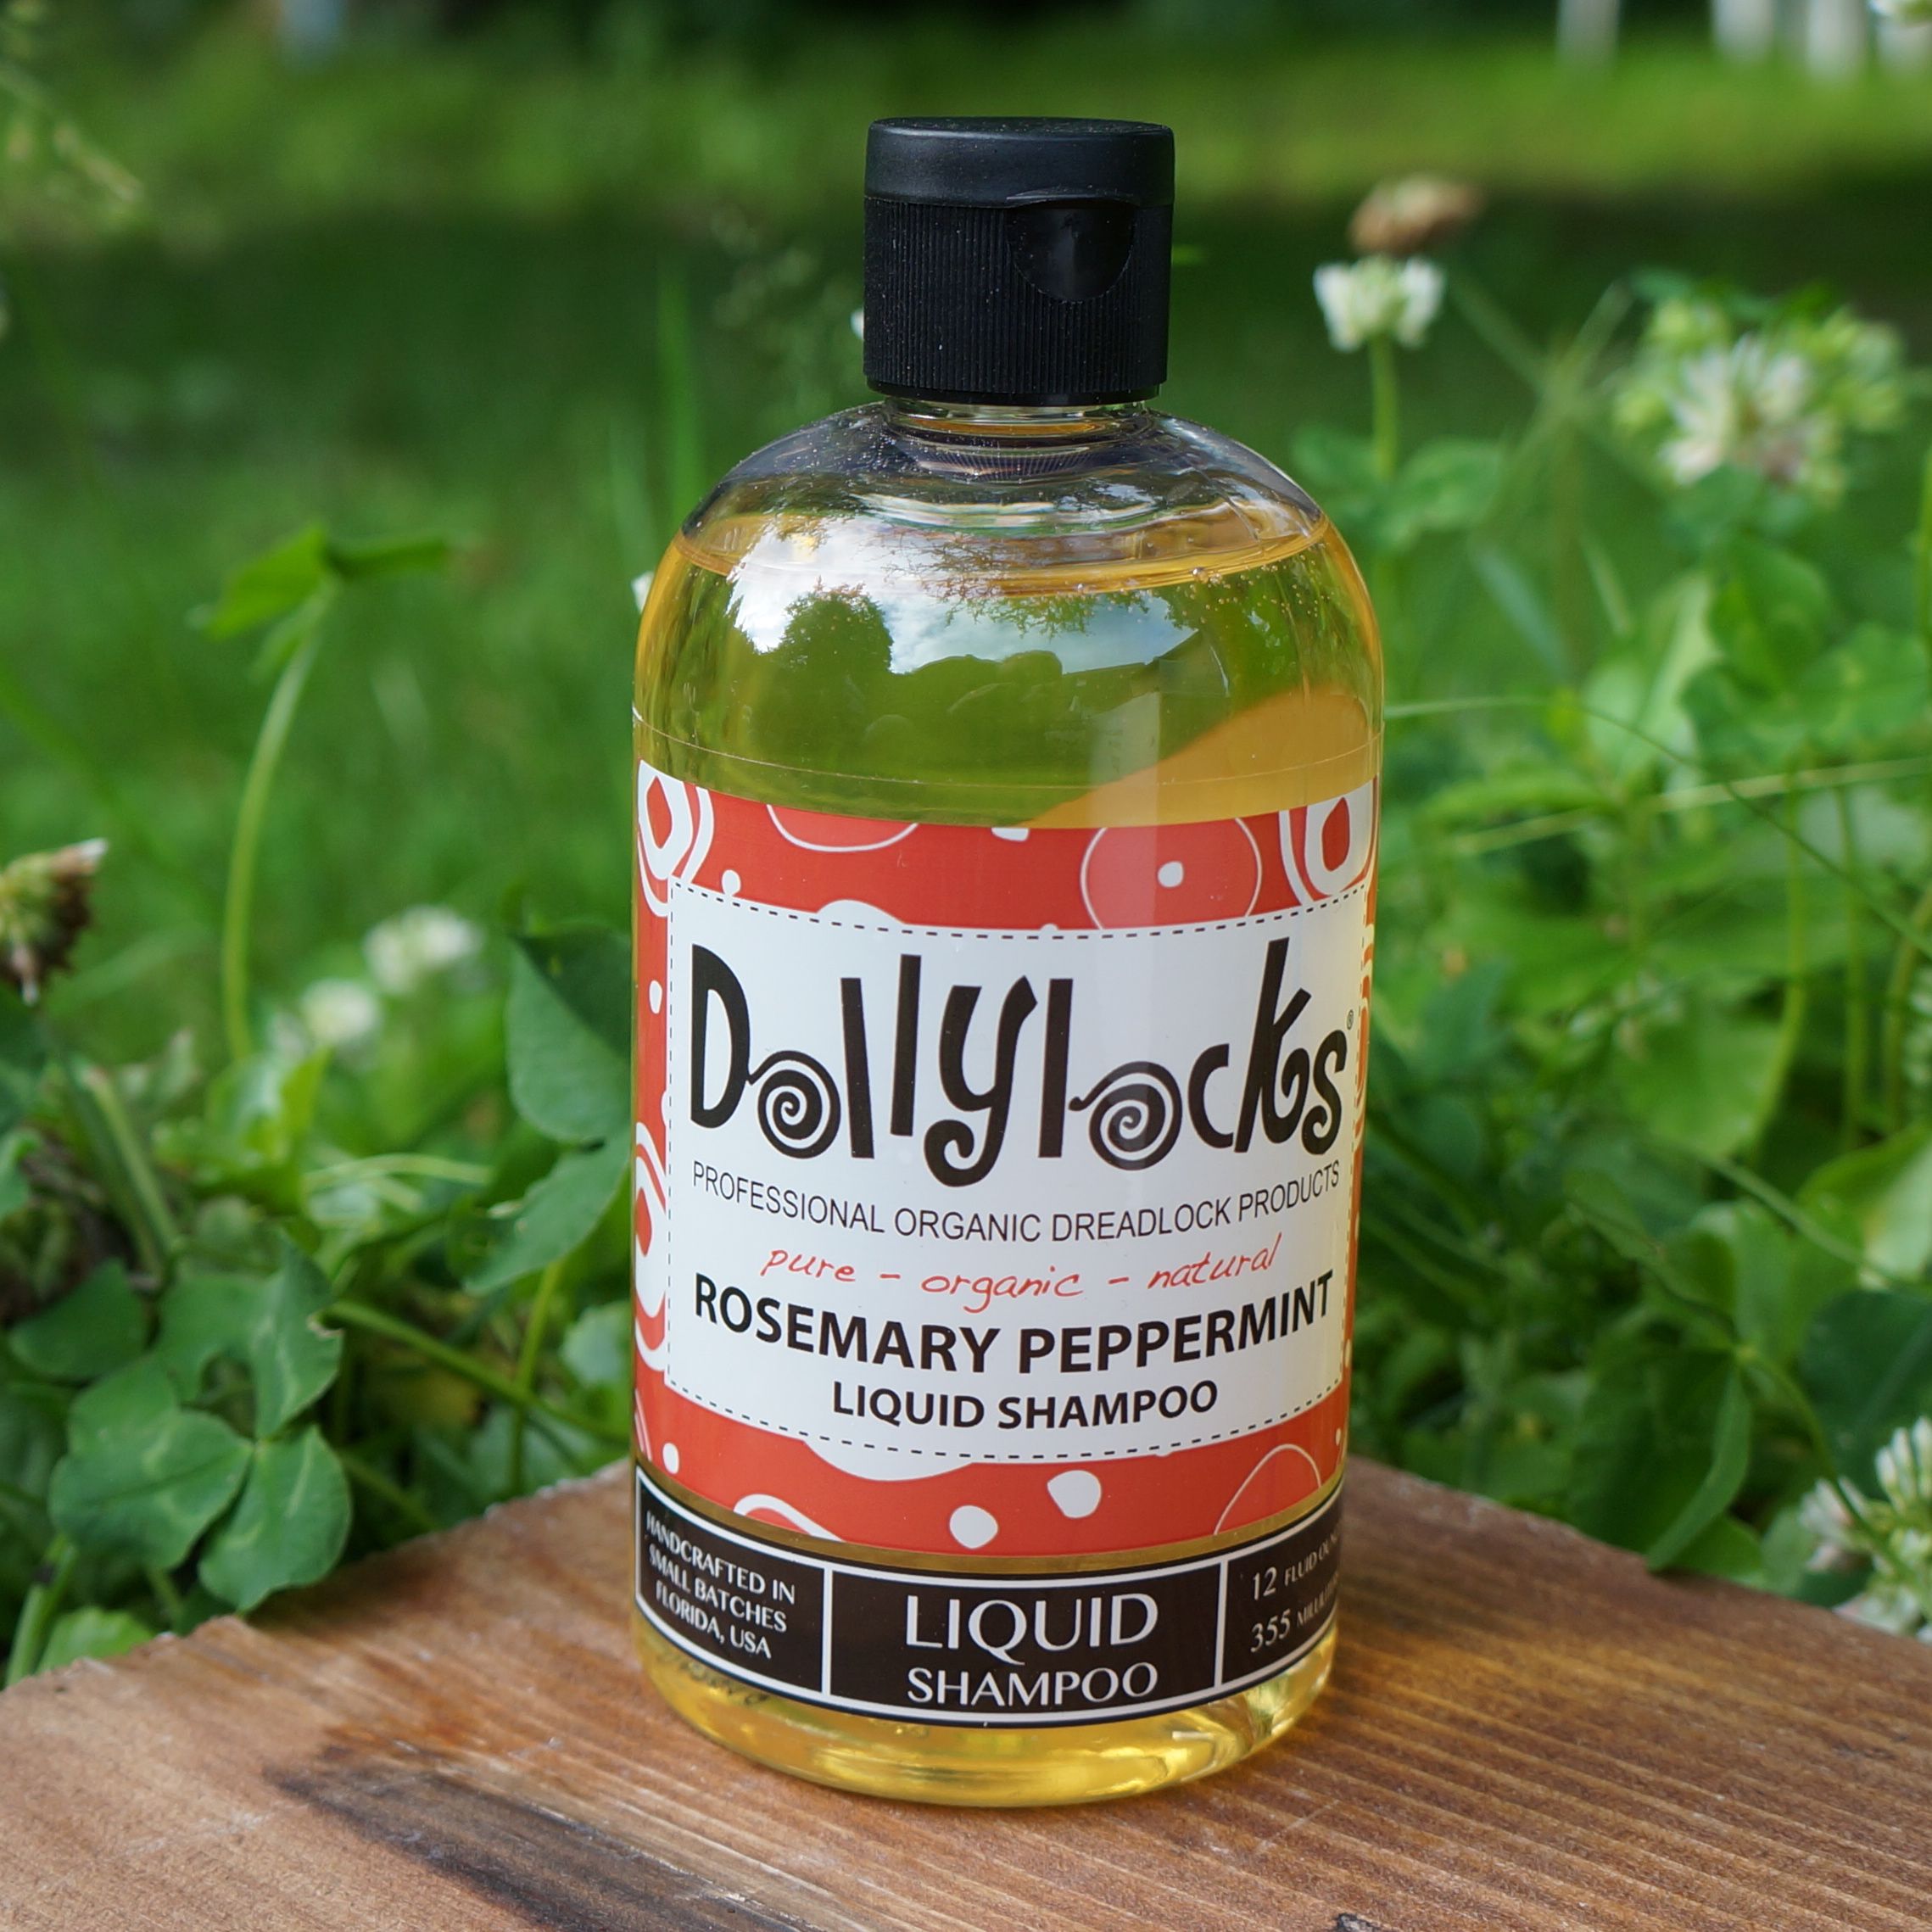 Dollylocks - Dreadlocks Detox Kit - Rosemary Peppermint by Dollylocks  Professional Organic Dreadlock Products 